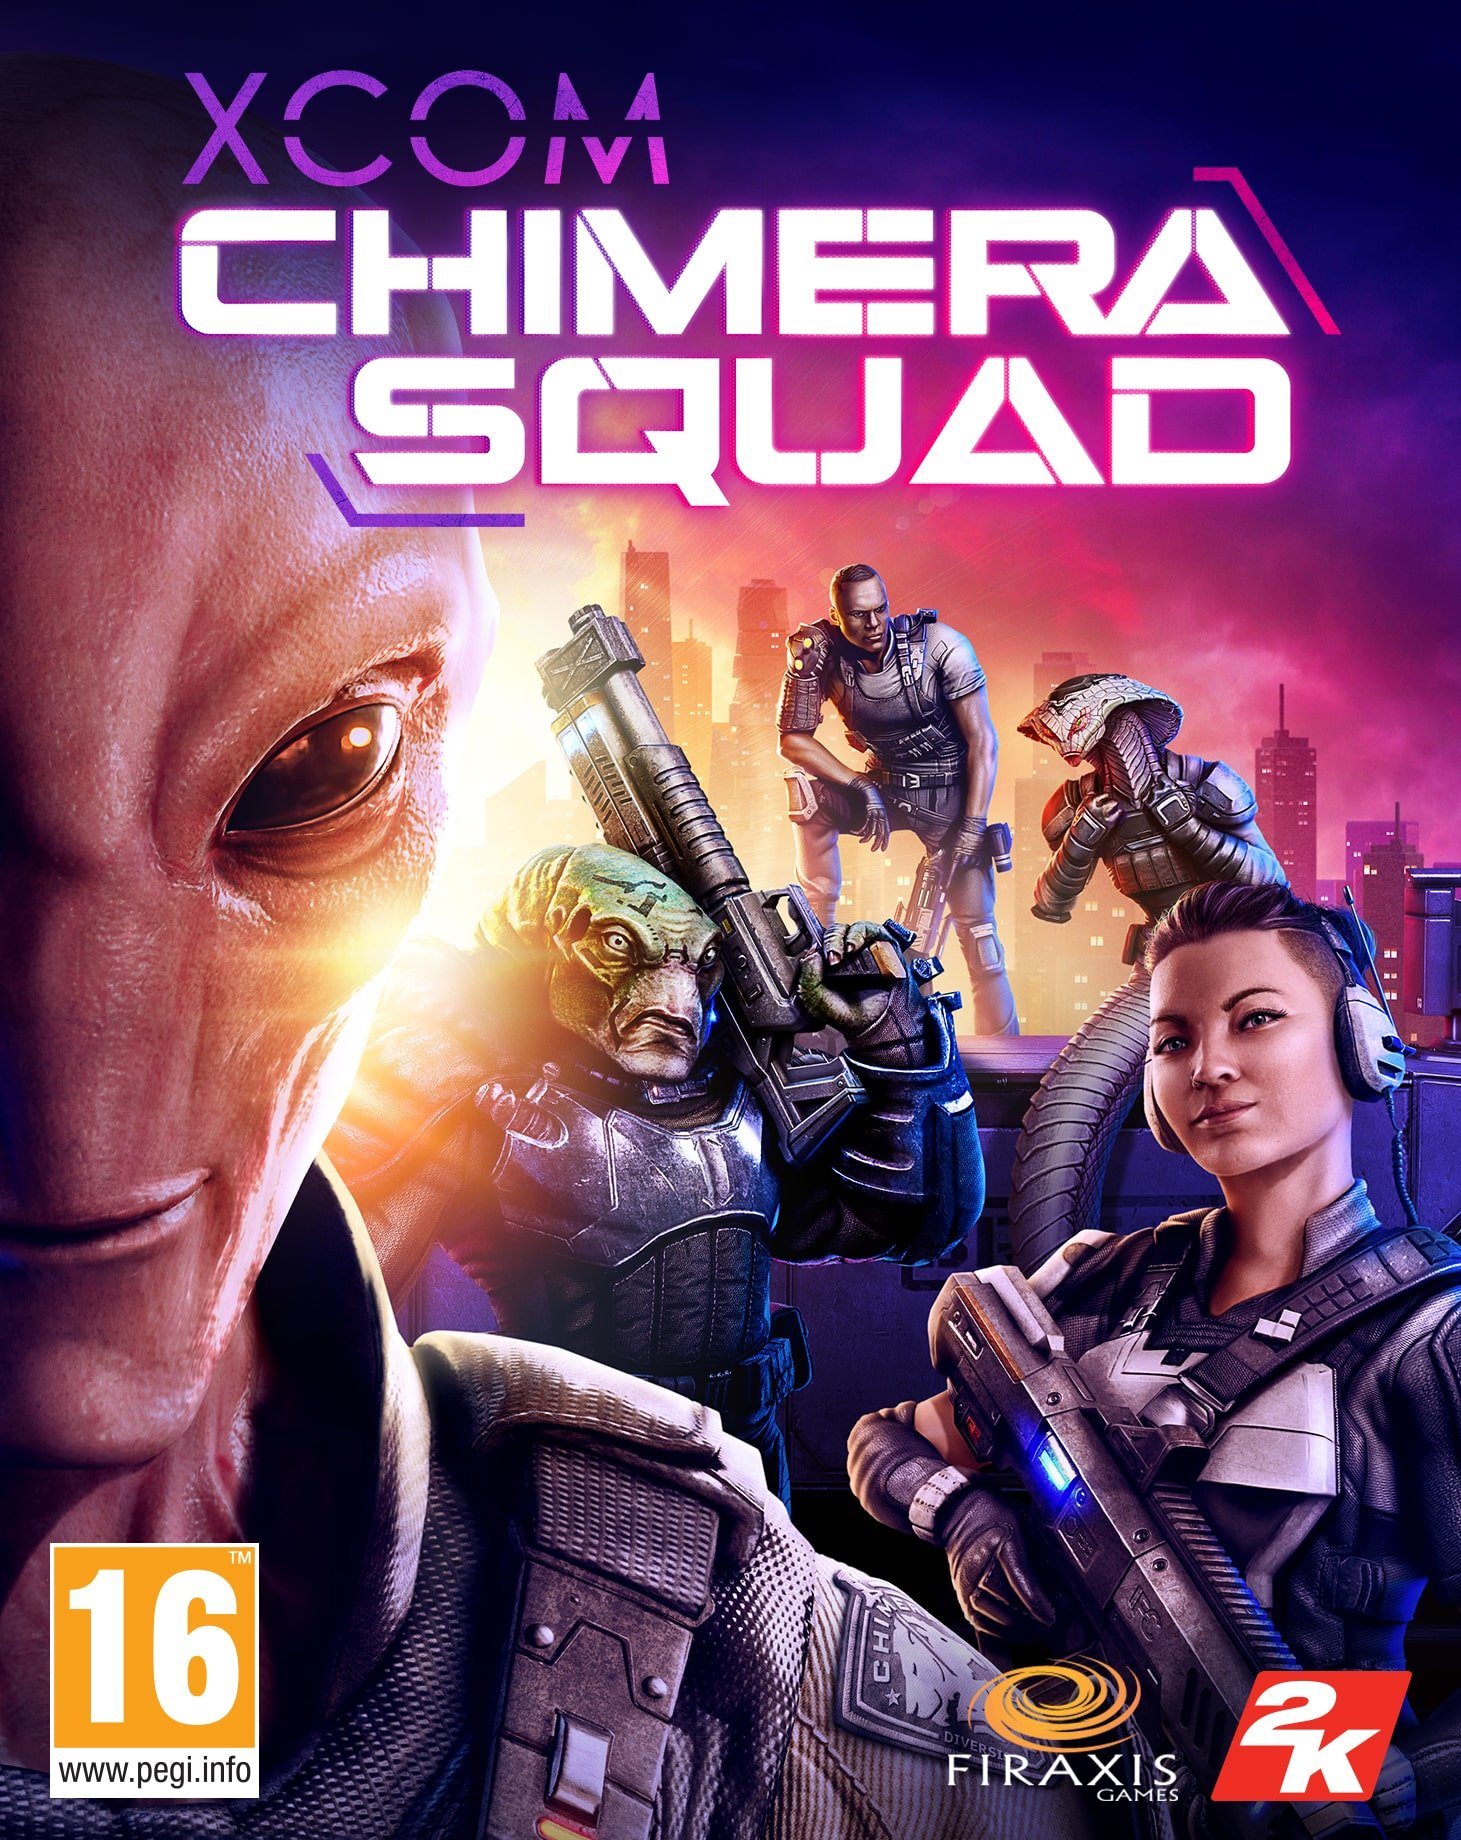 XCOM: Chimera Squad - PC DIGITAL